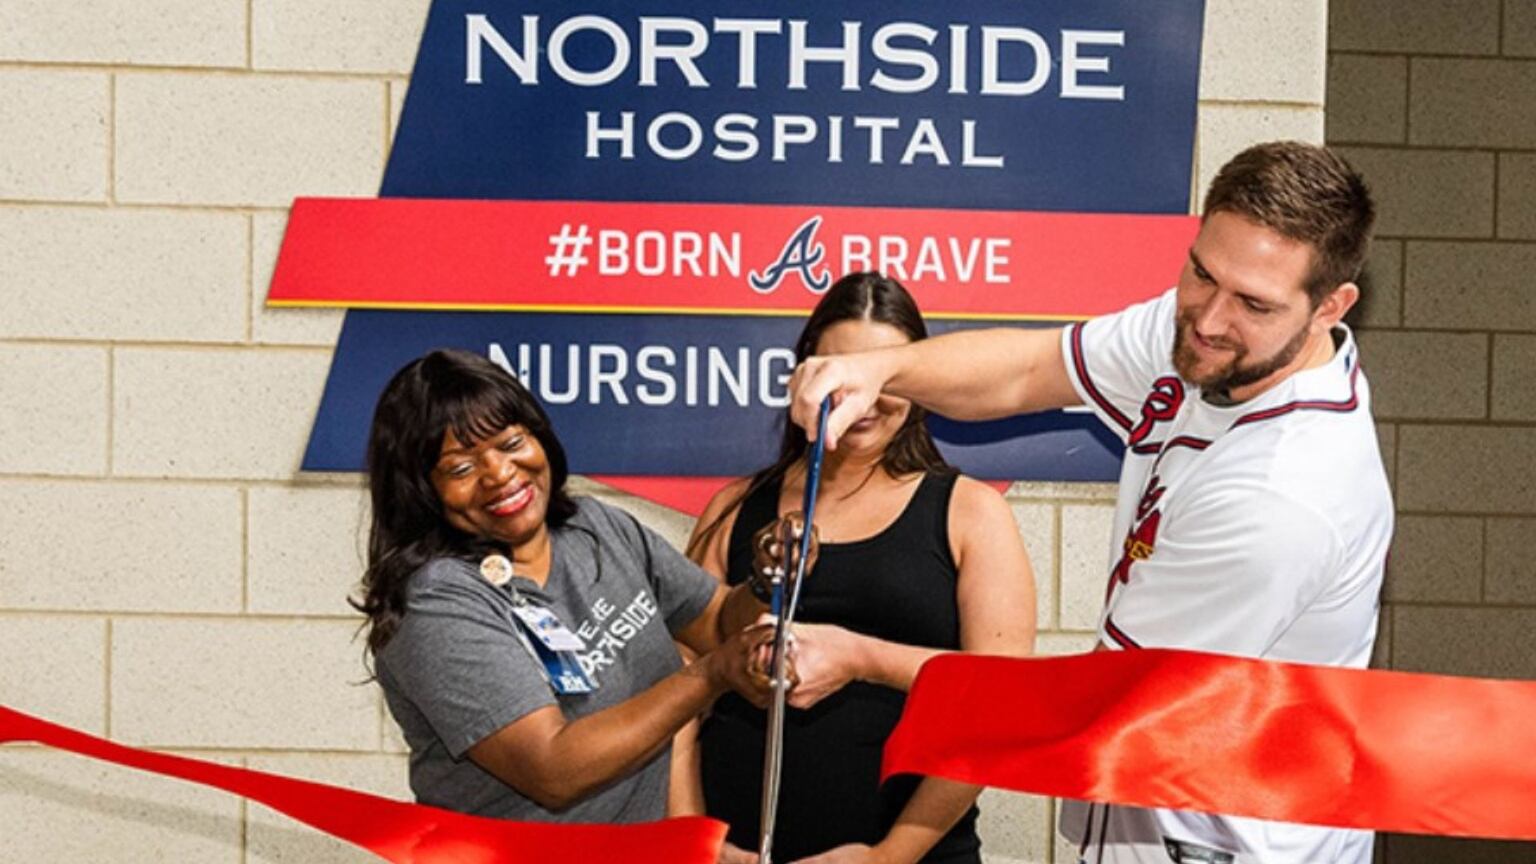 Atlanta Braves Unveil Nursing Lounge at Truist Park